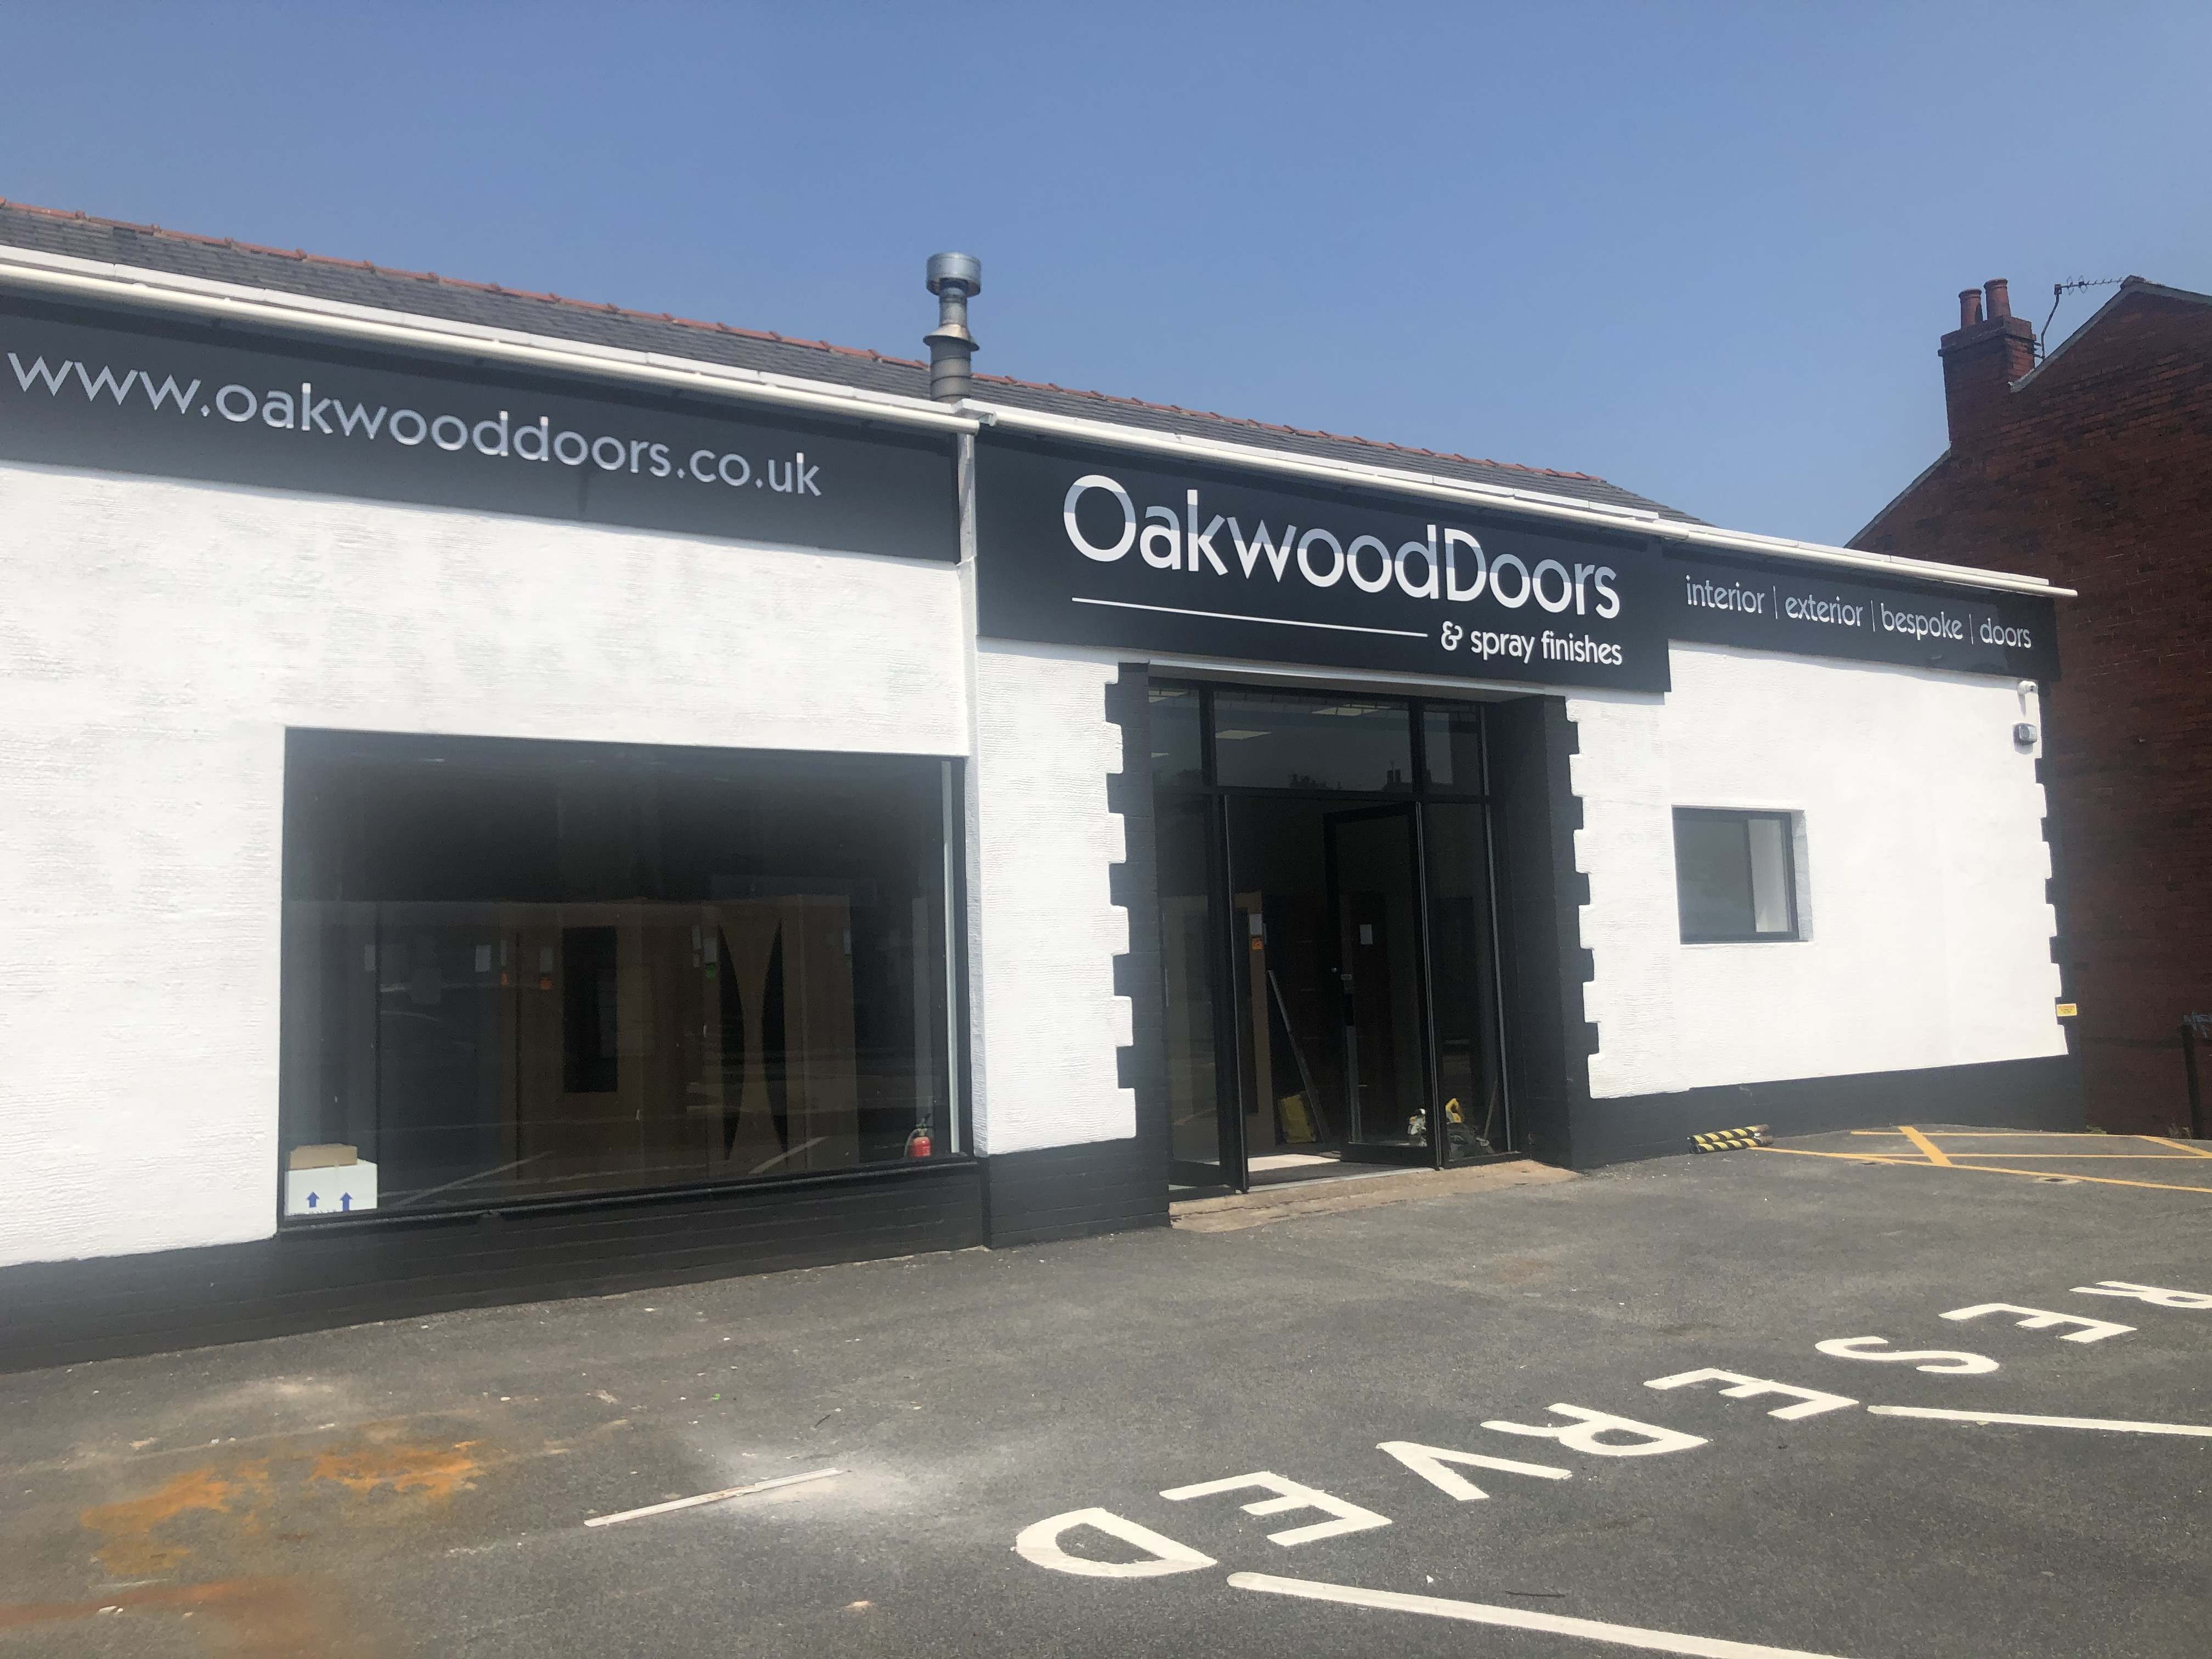 The new and improved Oakwood Doors showroom